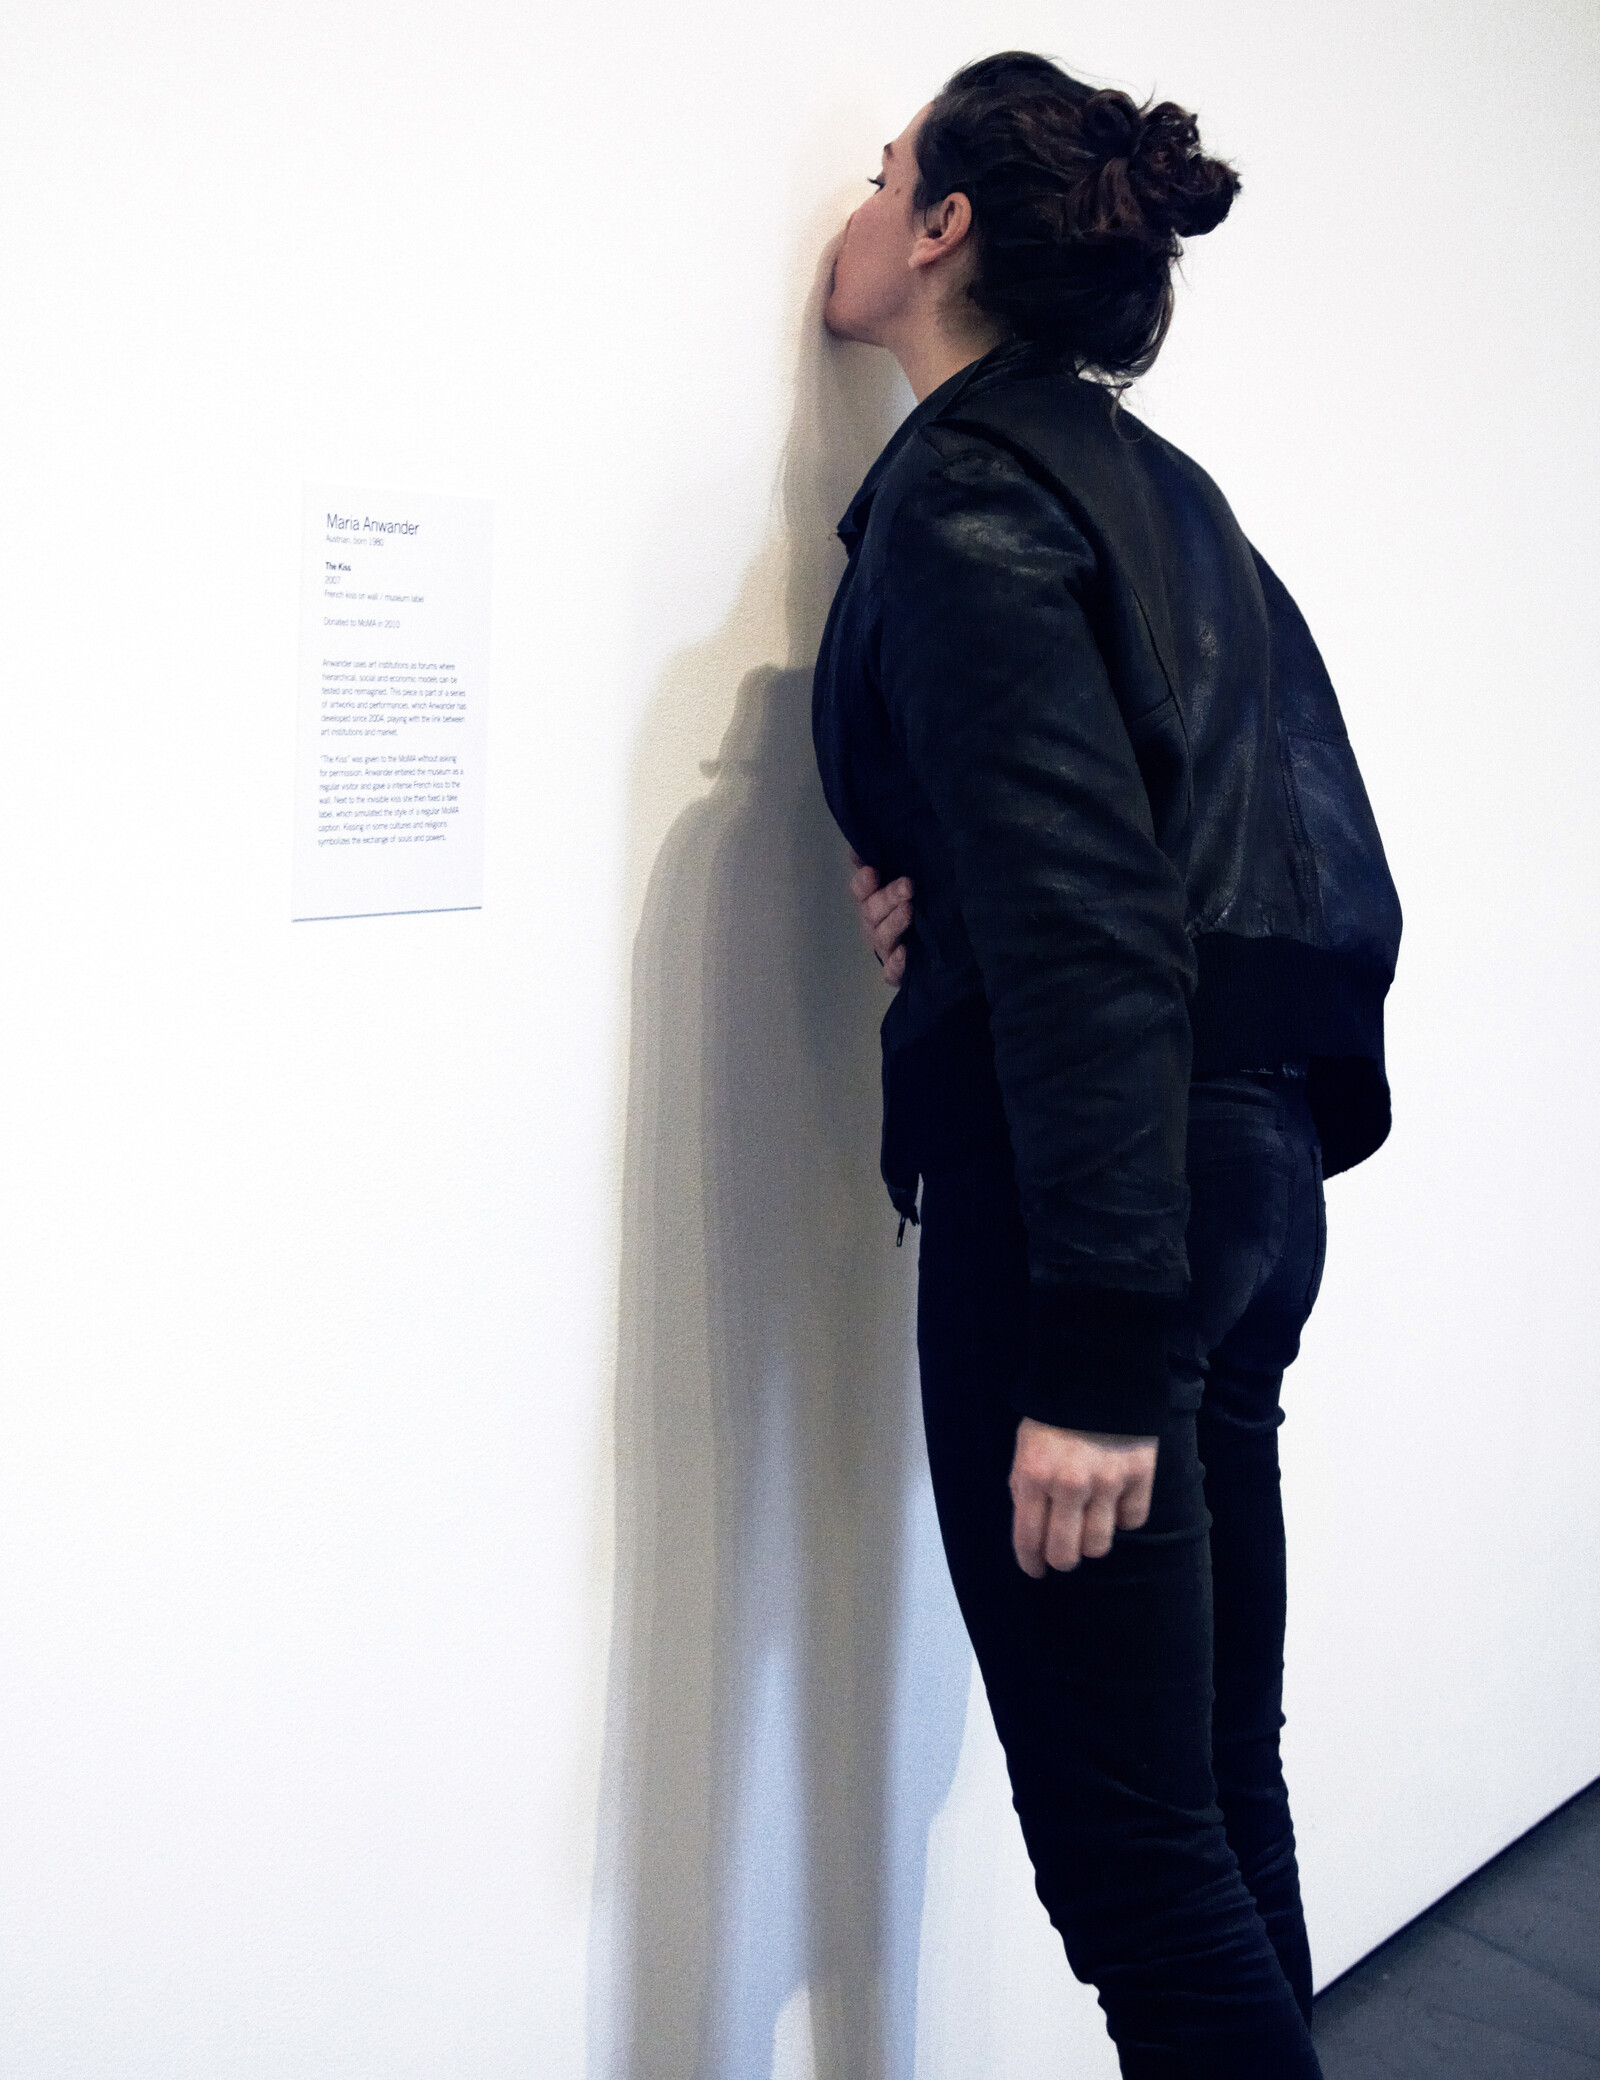 Maria Anwander,The Kiss (2010) - Foto: Christian Anwander